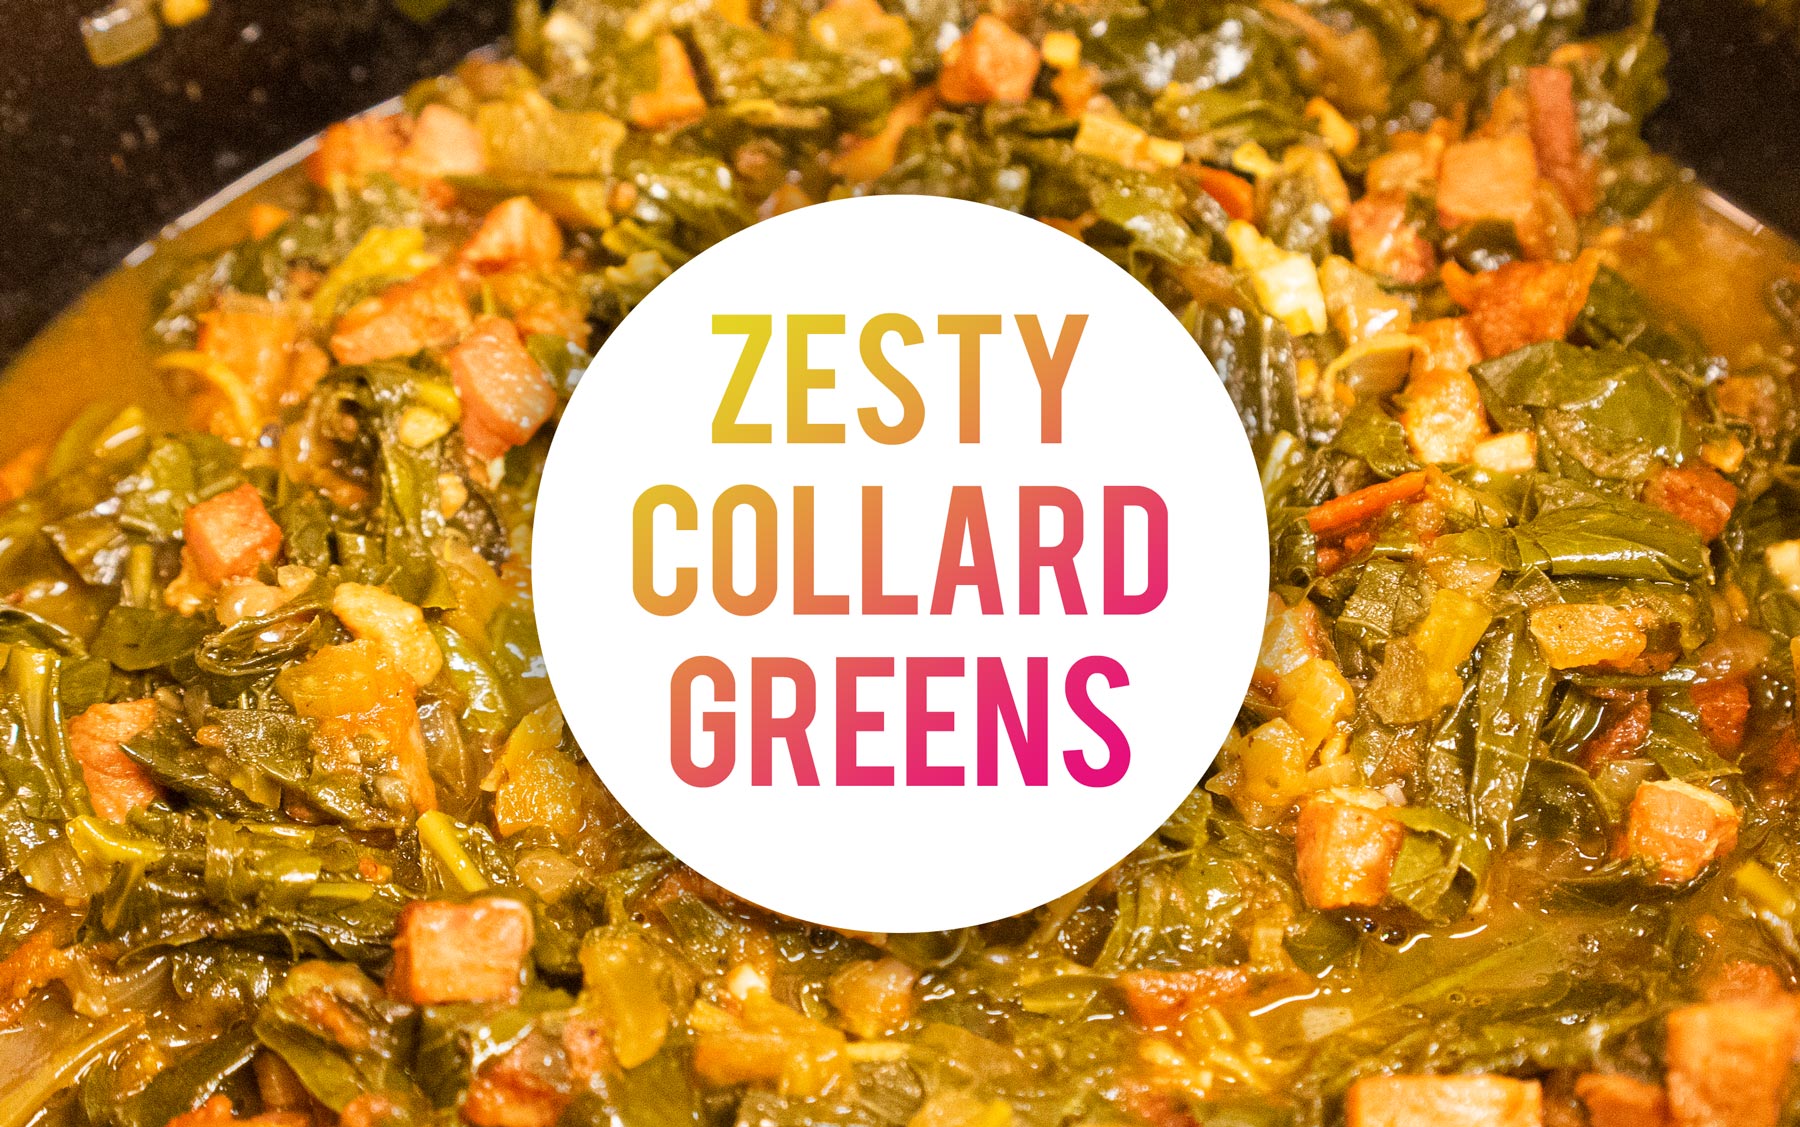 Zesty Collard Greens - YumSizzle